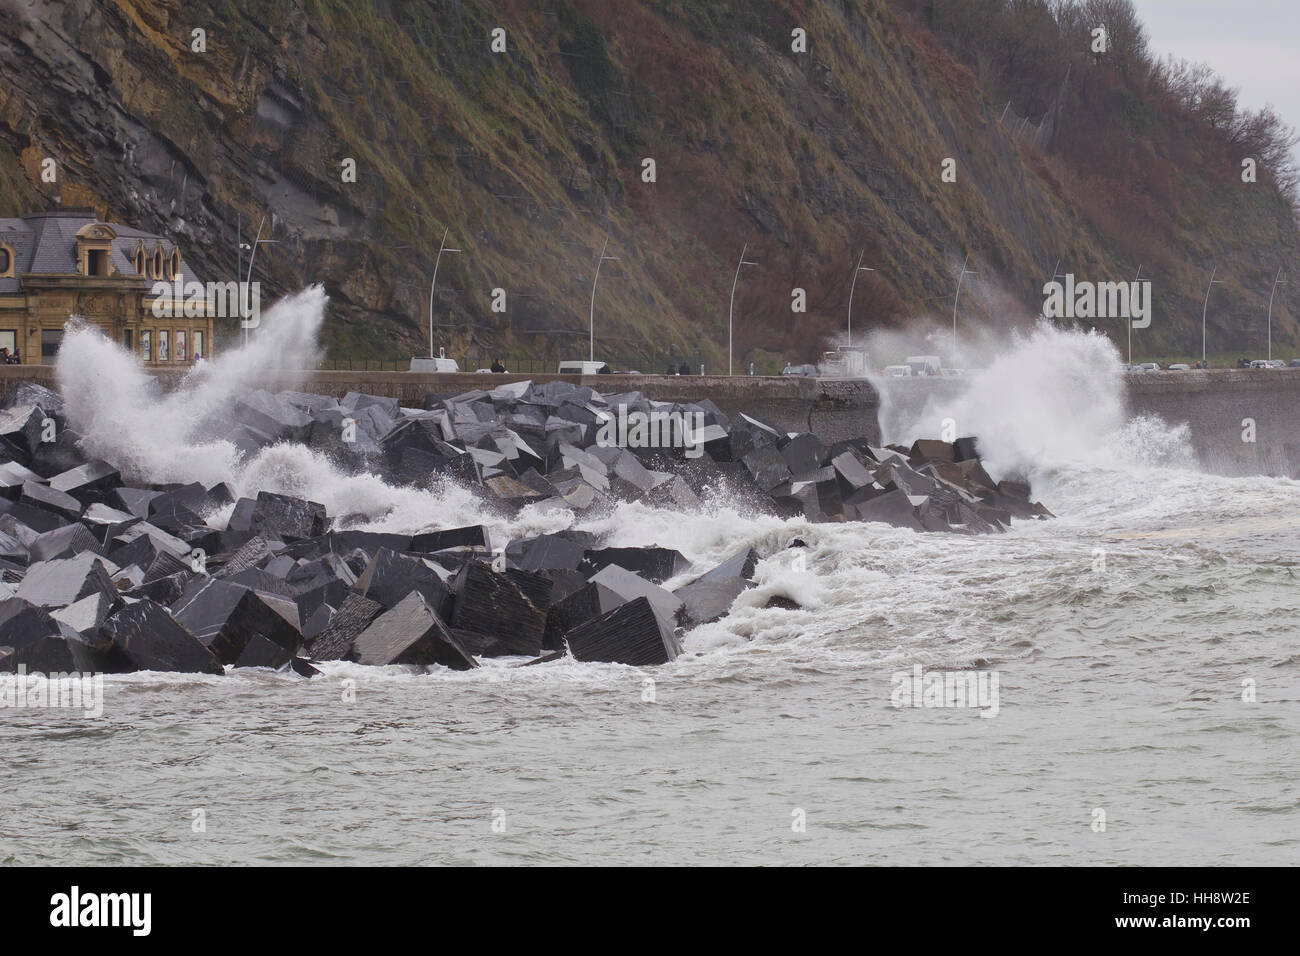 Wellen brechen in Wellenbrecher am Ufer in Donostia (Guipuzcoa, Baskenland, Spanien). Stockfoto